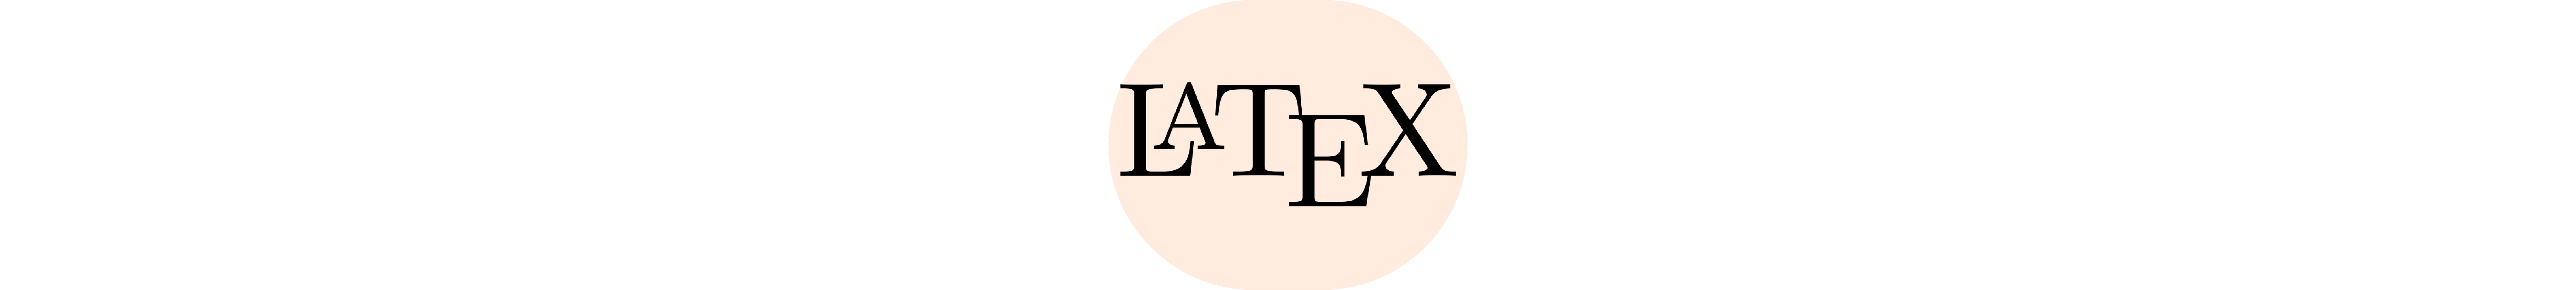 Latex高效写作系列 表格对齐格式 云栖社区